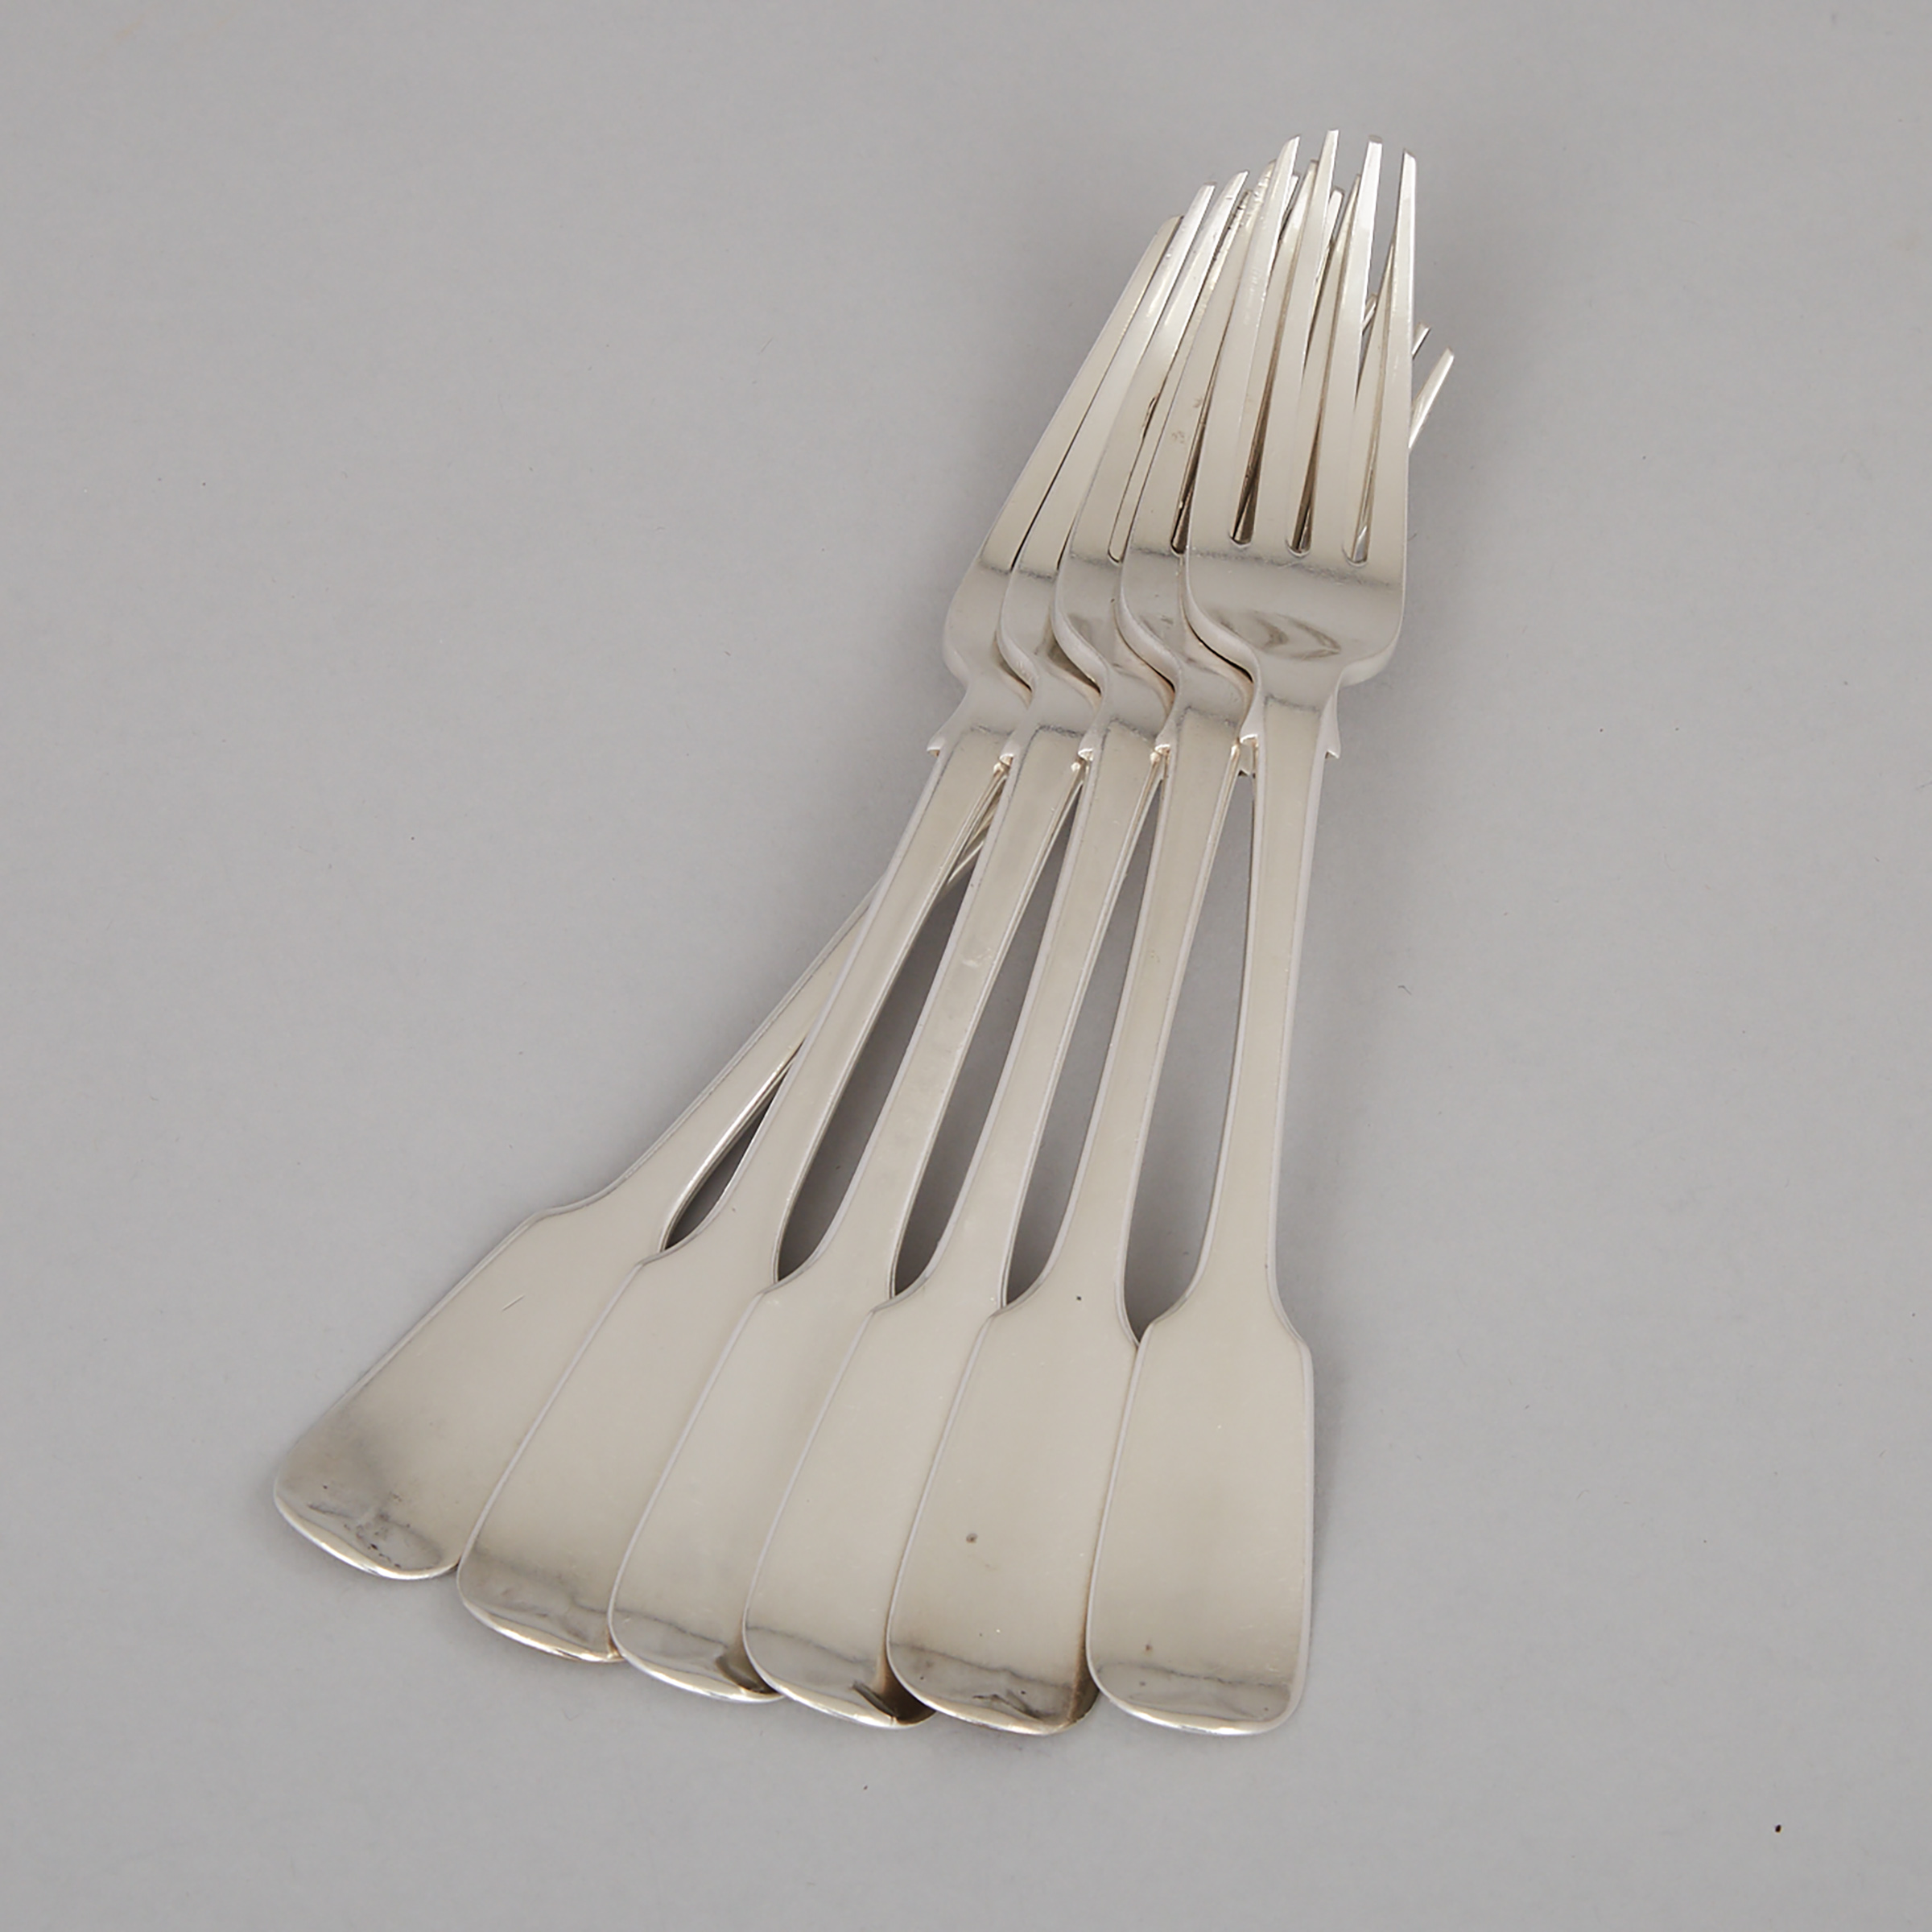 Six Canadian Silver Fiddle Pattern Table Forks, Henry Jackson, Toronto, Ont., c.1837-69